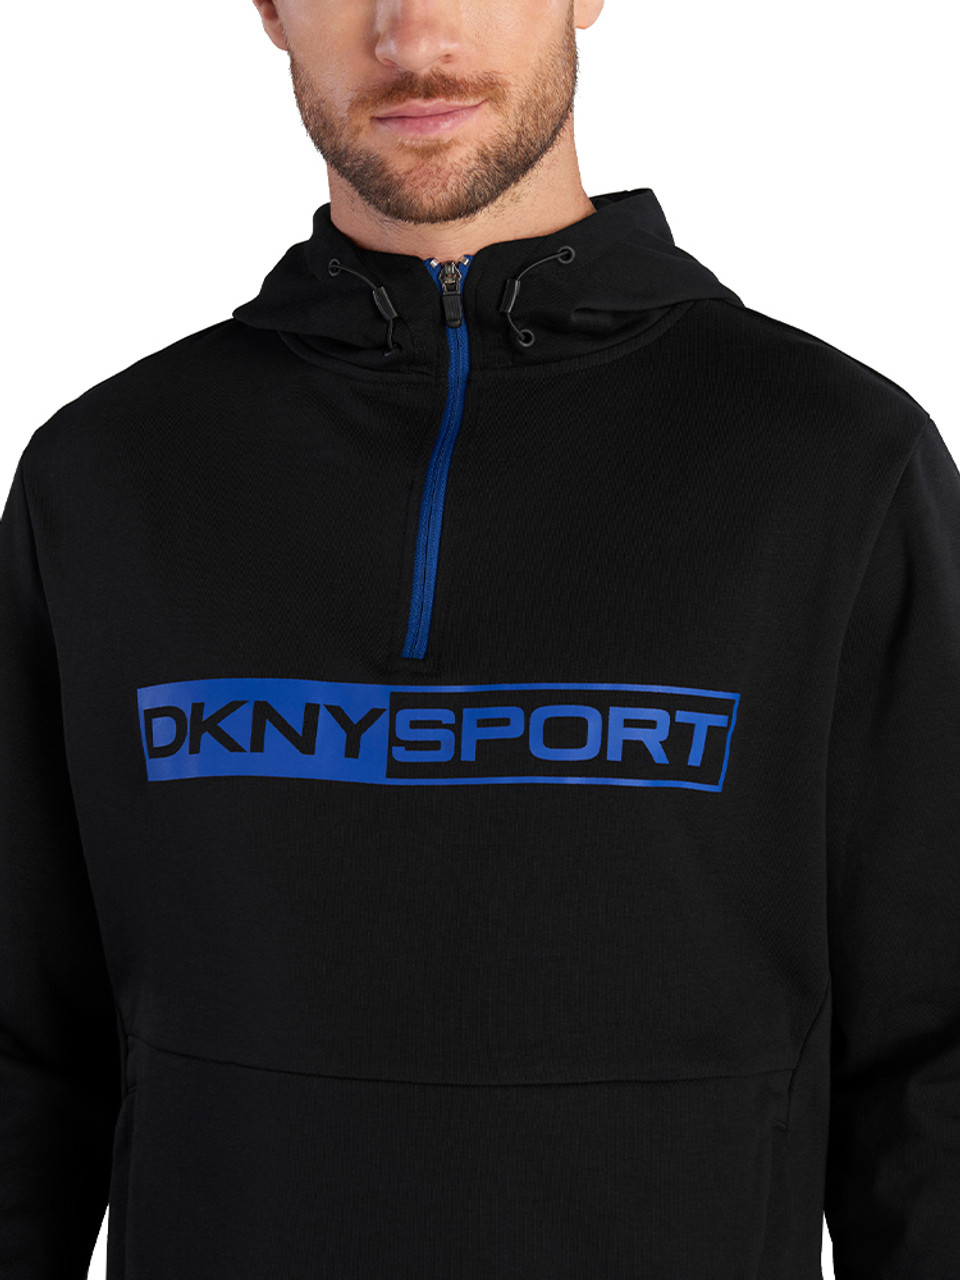 DKNY Sport East River T-Shirt - Stone